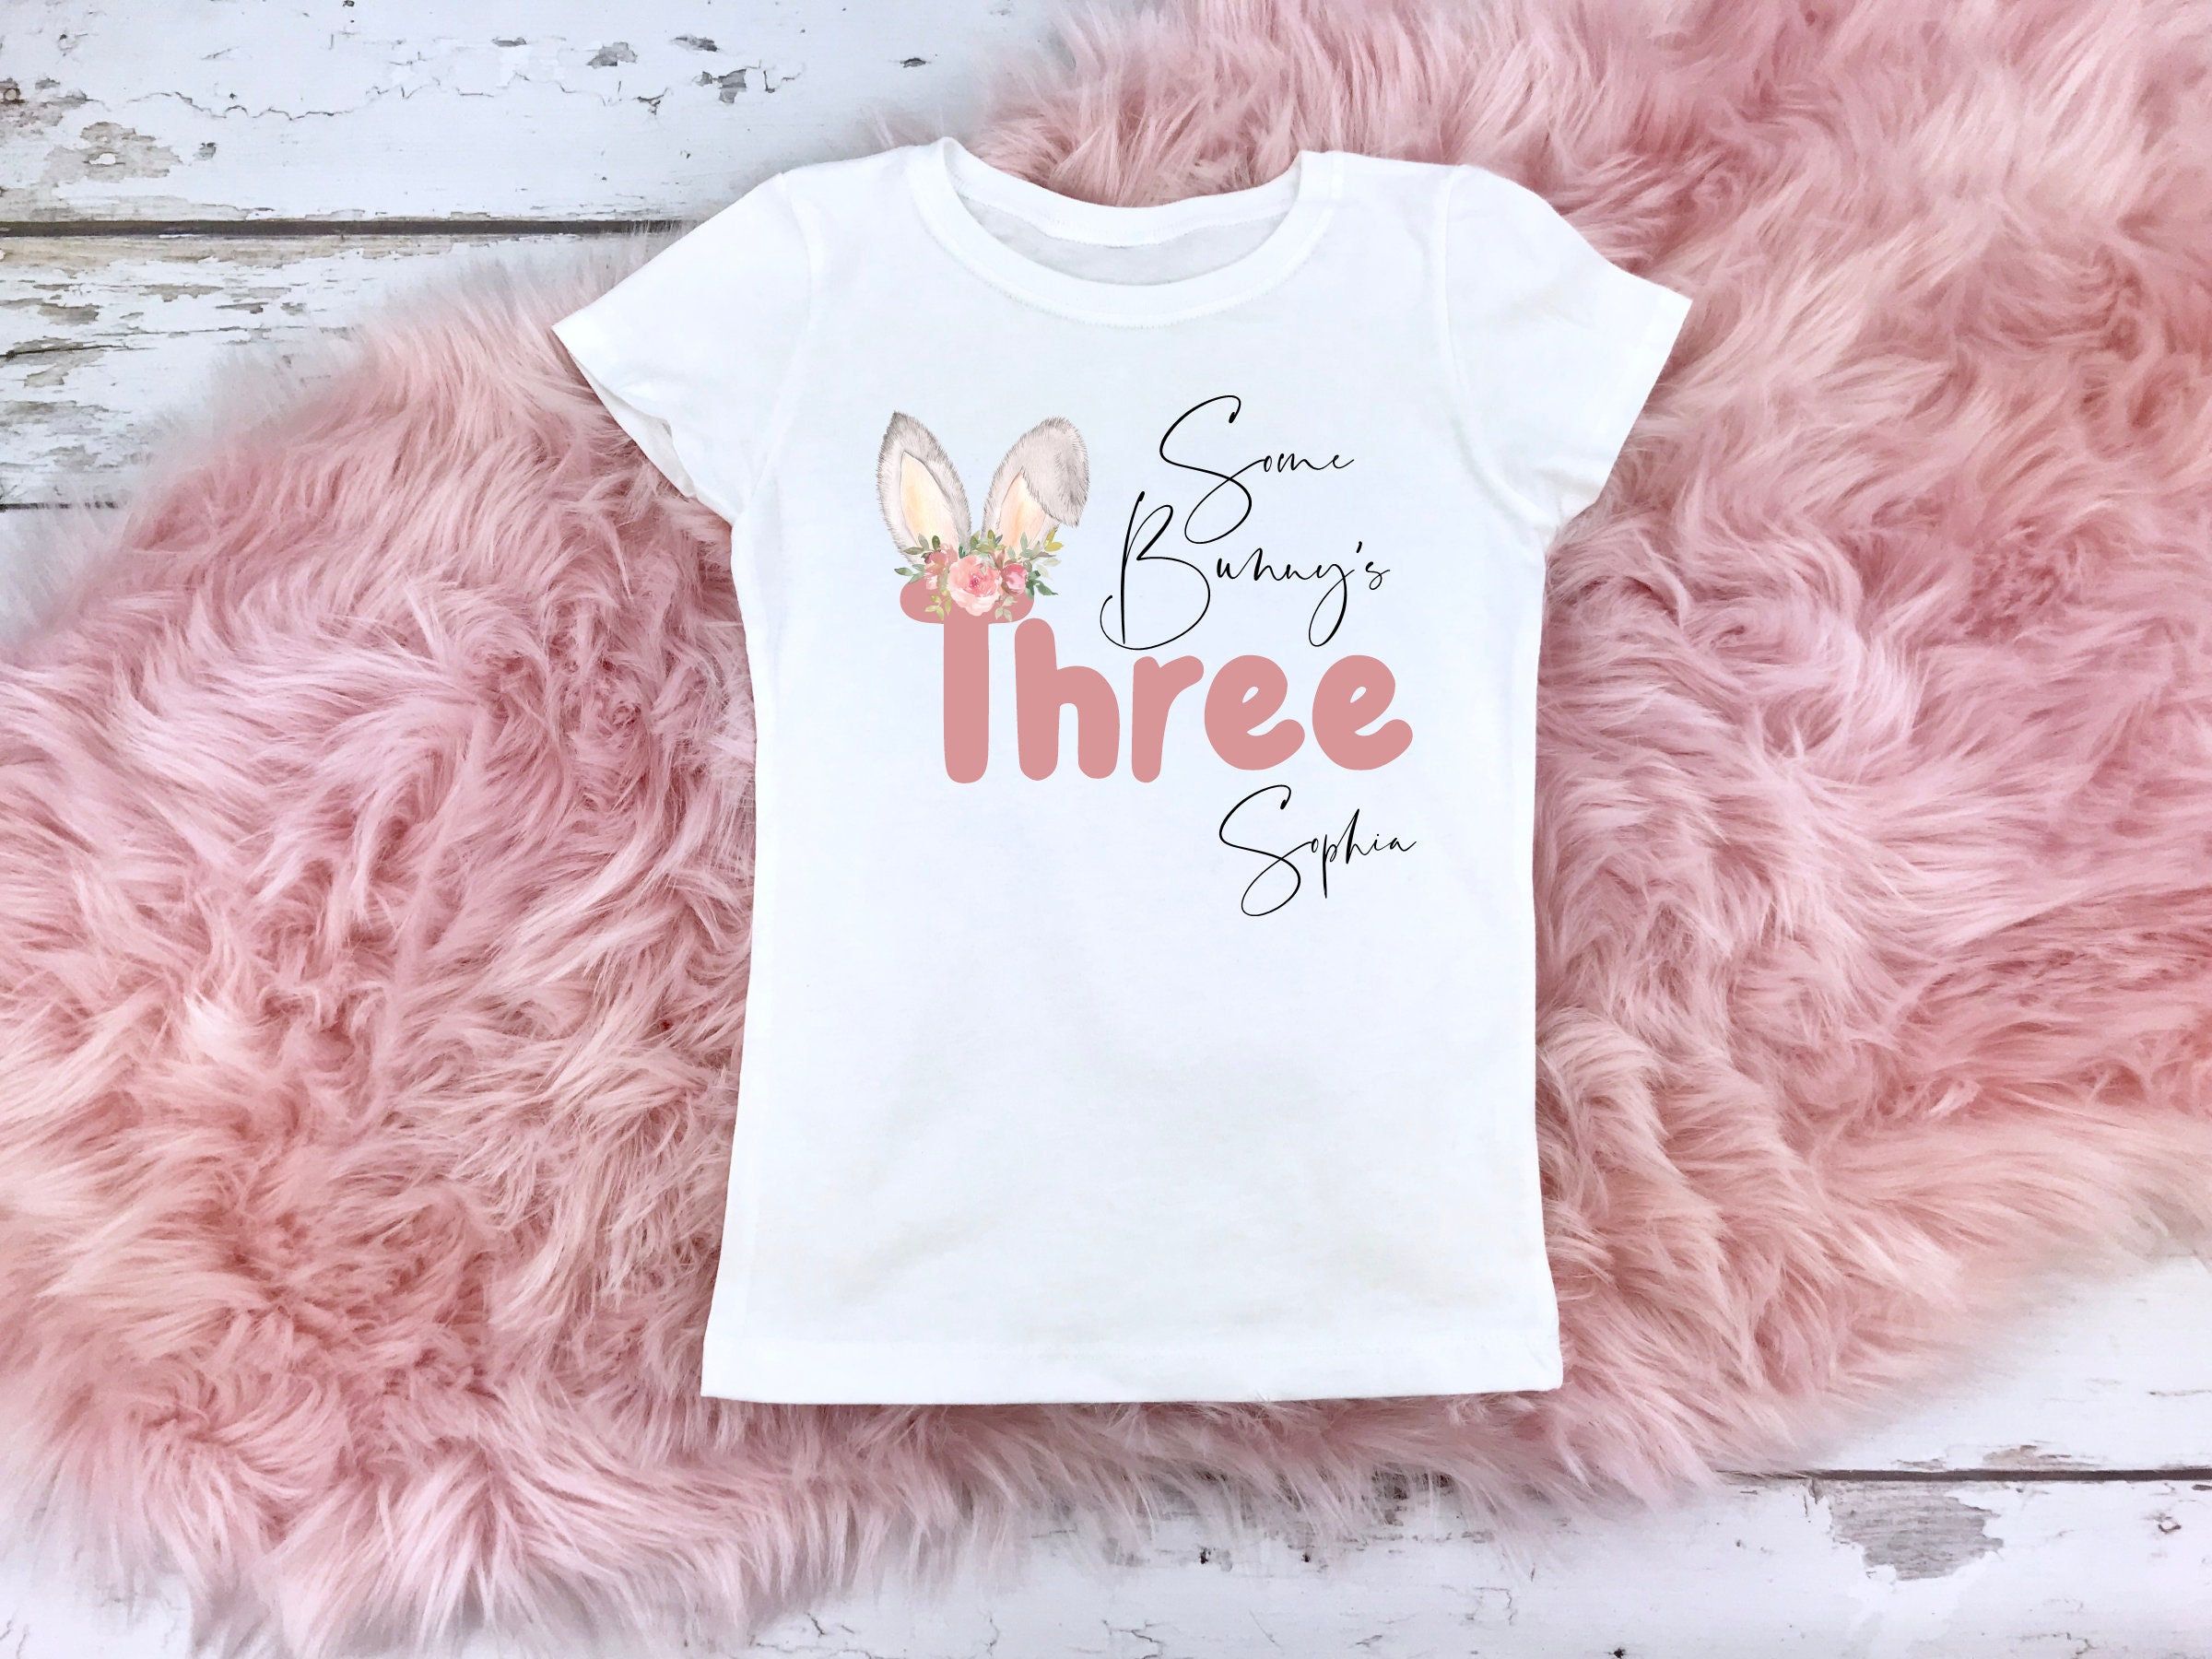 Teens Cute T-Shirt Kawaii Ice Cream Bear Bunny Print Tee Japanese  Colorblock Slit Short Sleeve T-Shirts Girl's Summer T-Shirt Tops ·  HIMI'Store · Online Store Powered by Storenvy